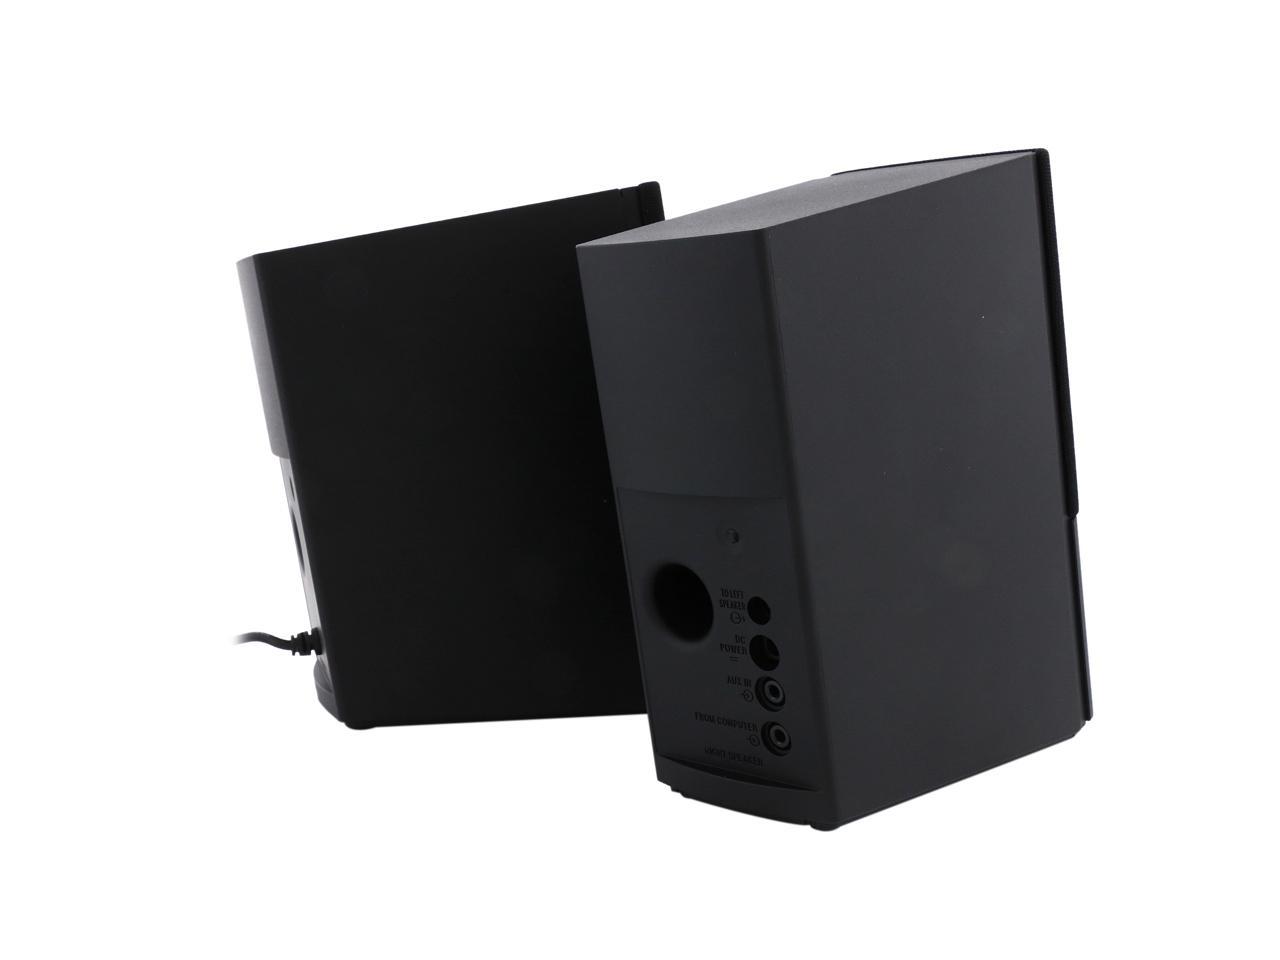 BOSE Companion 2 Series III Multimedia Speaker System - Newegg.com